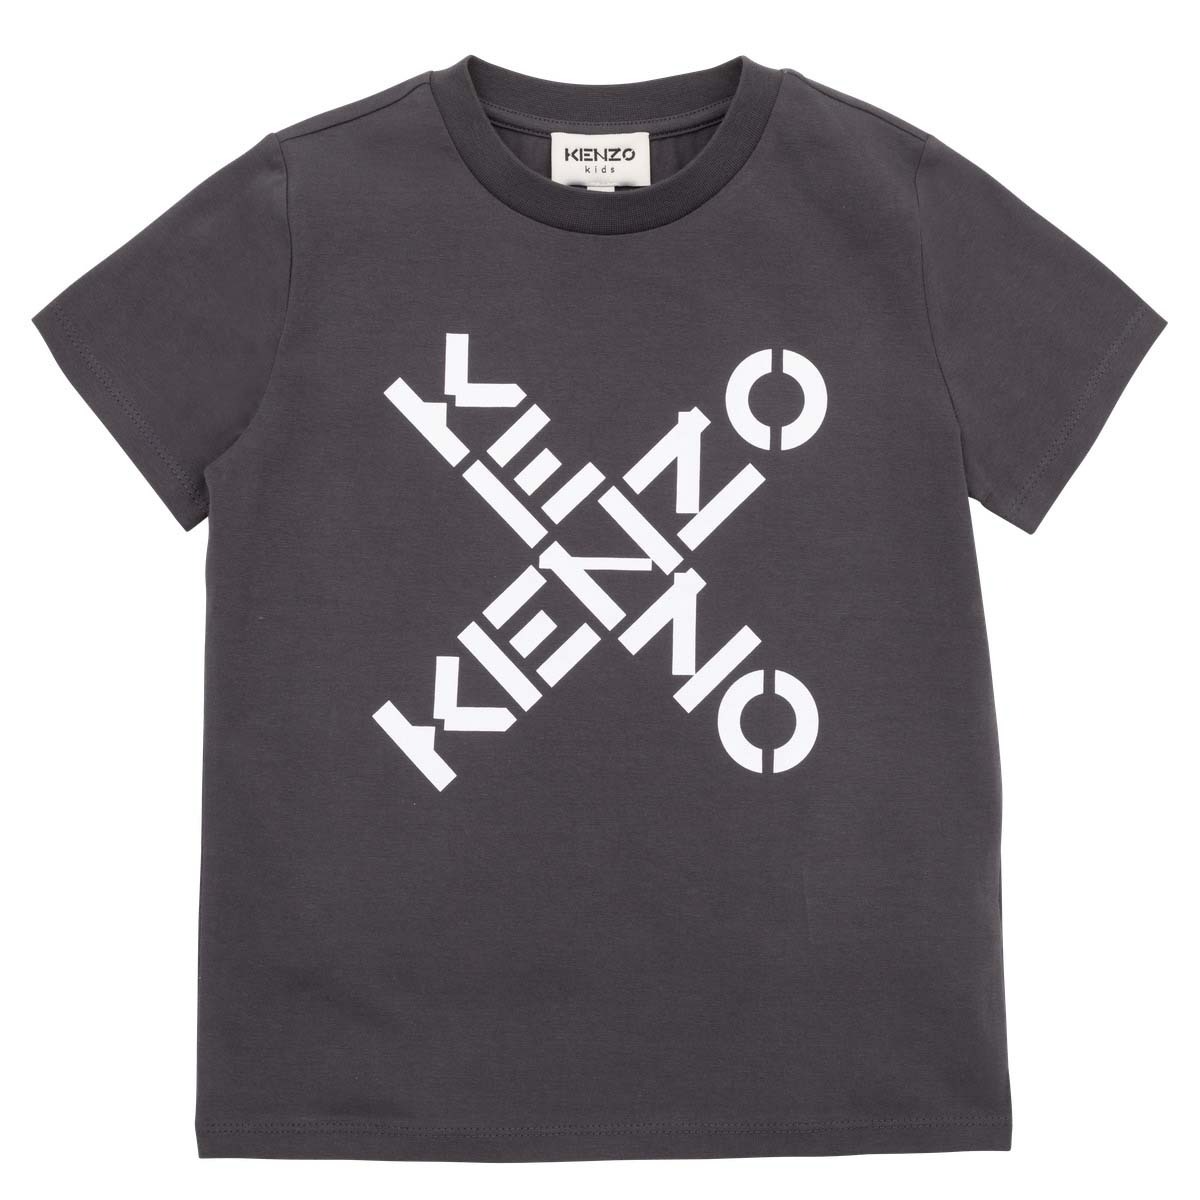 Kenzo Kid's Short Sleeves T Shirt - Color: Dark Grey - Kids Premium Clothing -